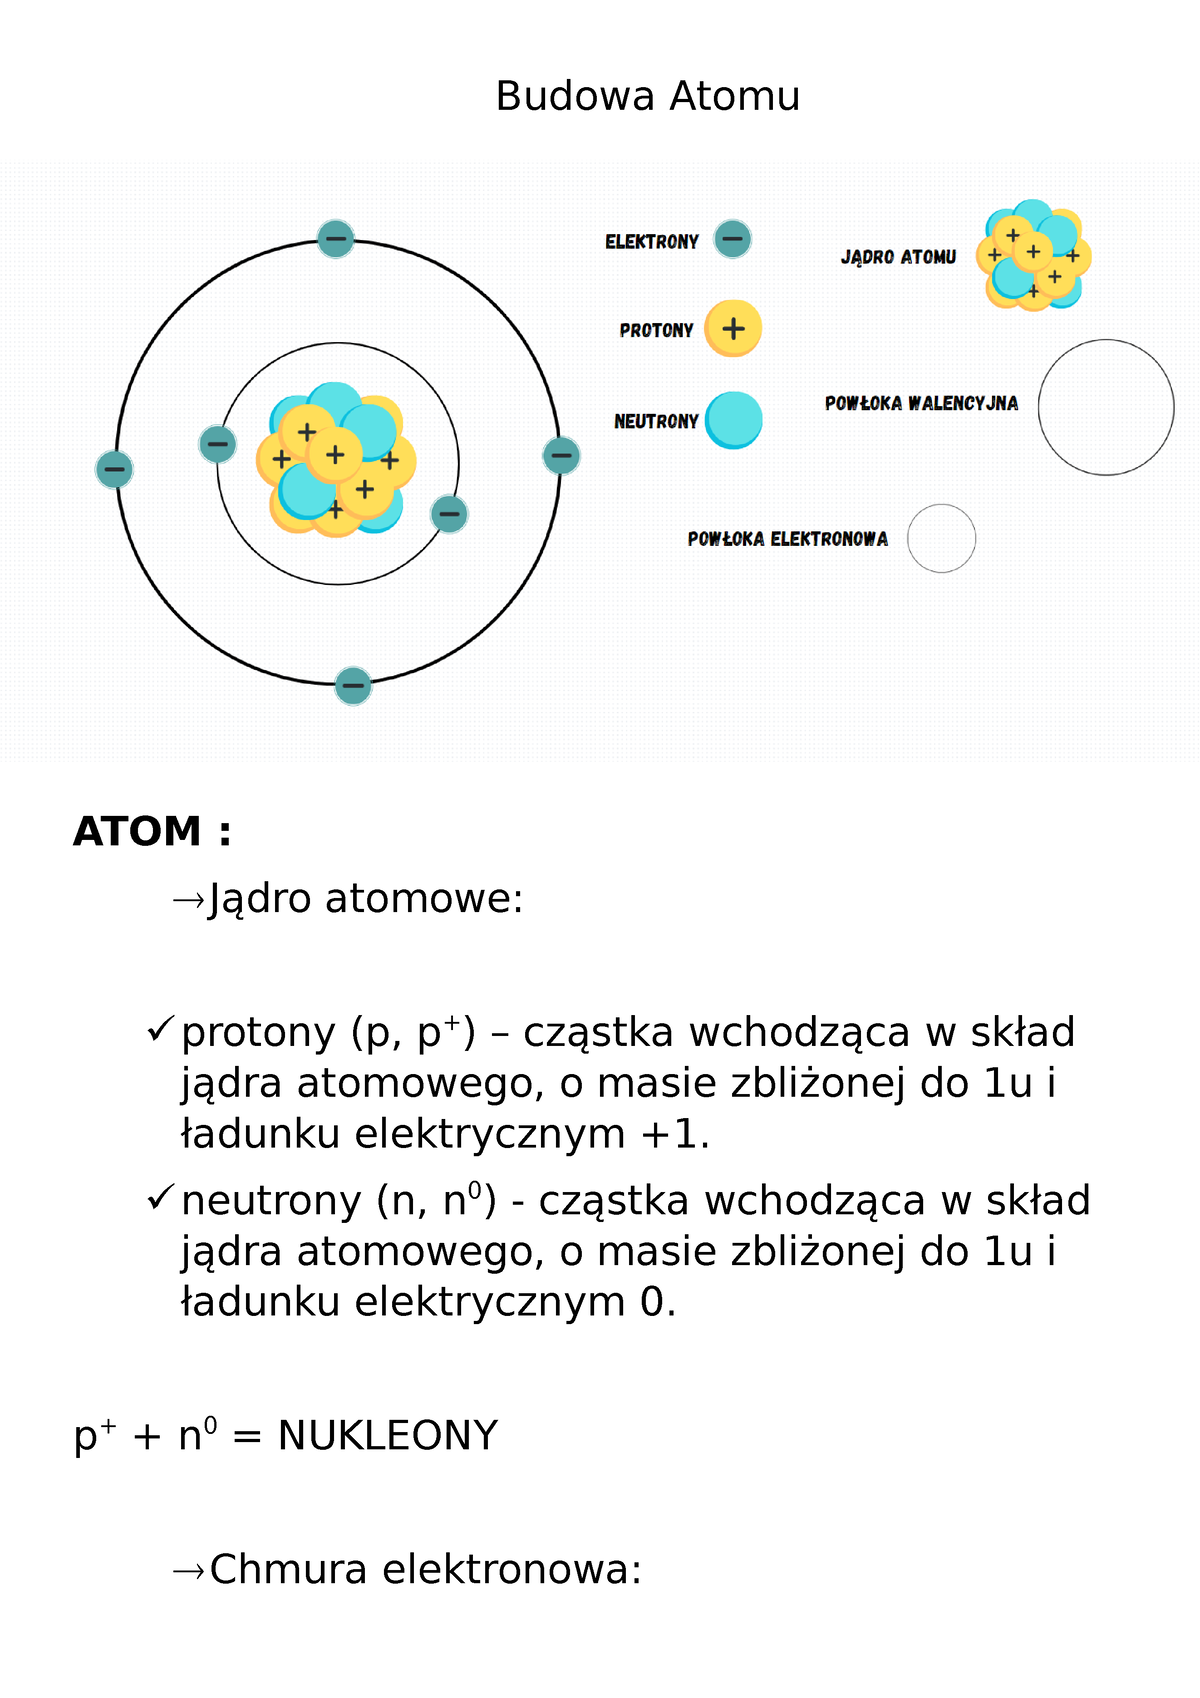 Budowa Atomu - Budowa Atomu ATOM : Jądro atomowe: protony (p, p+ ...